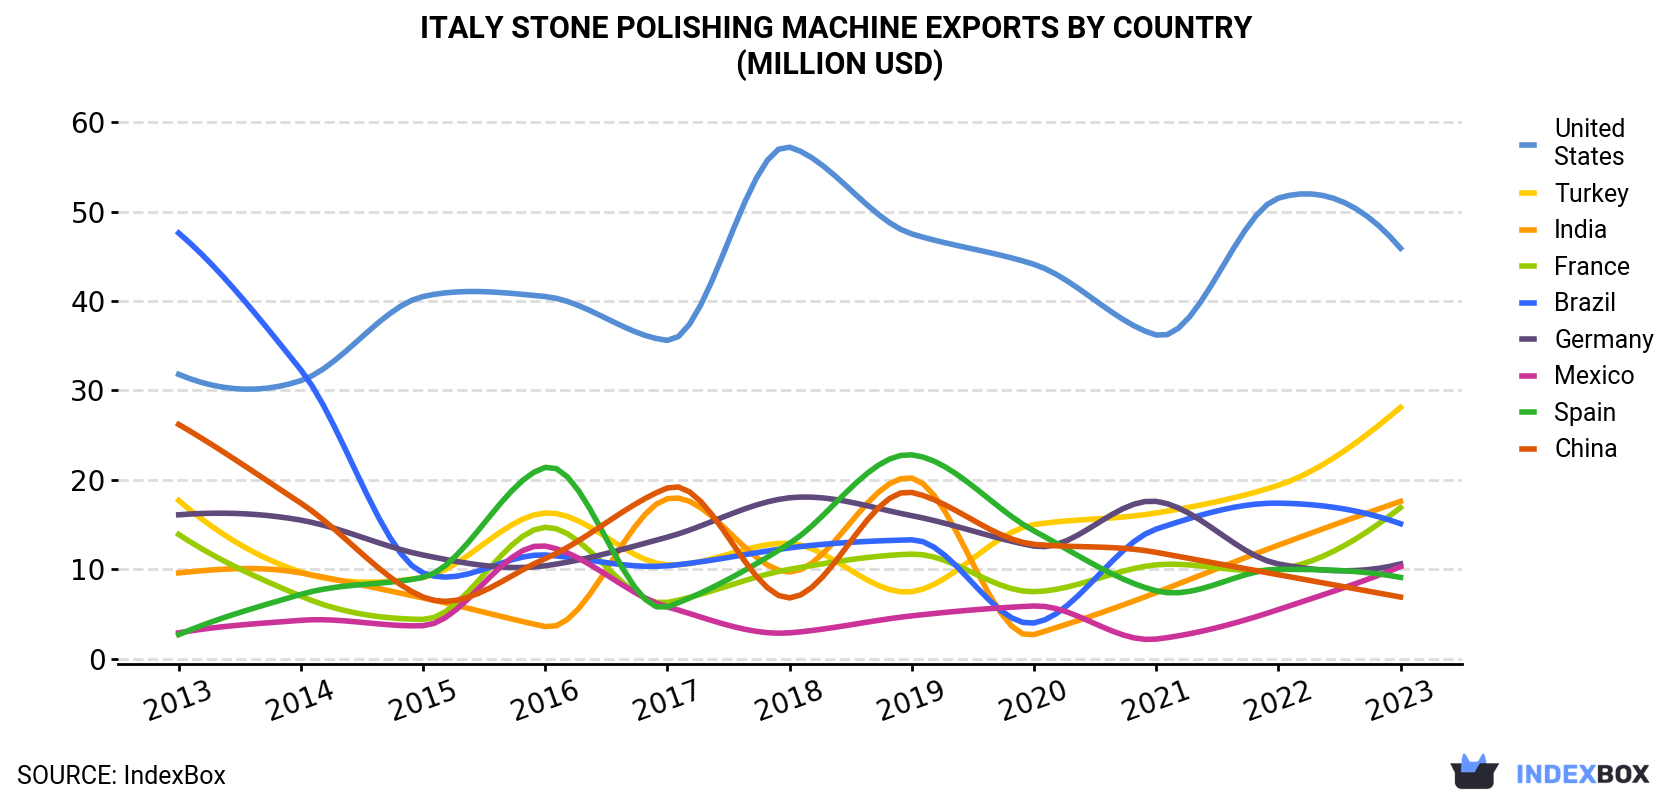 Italy Stone Polishing Machine Exports By Country (Million USD)